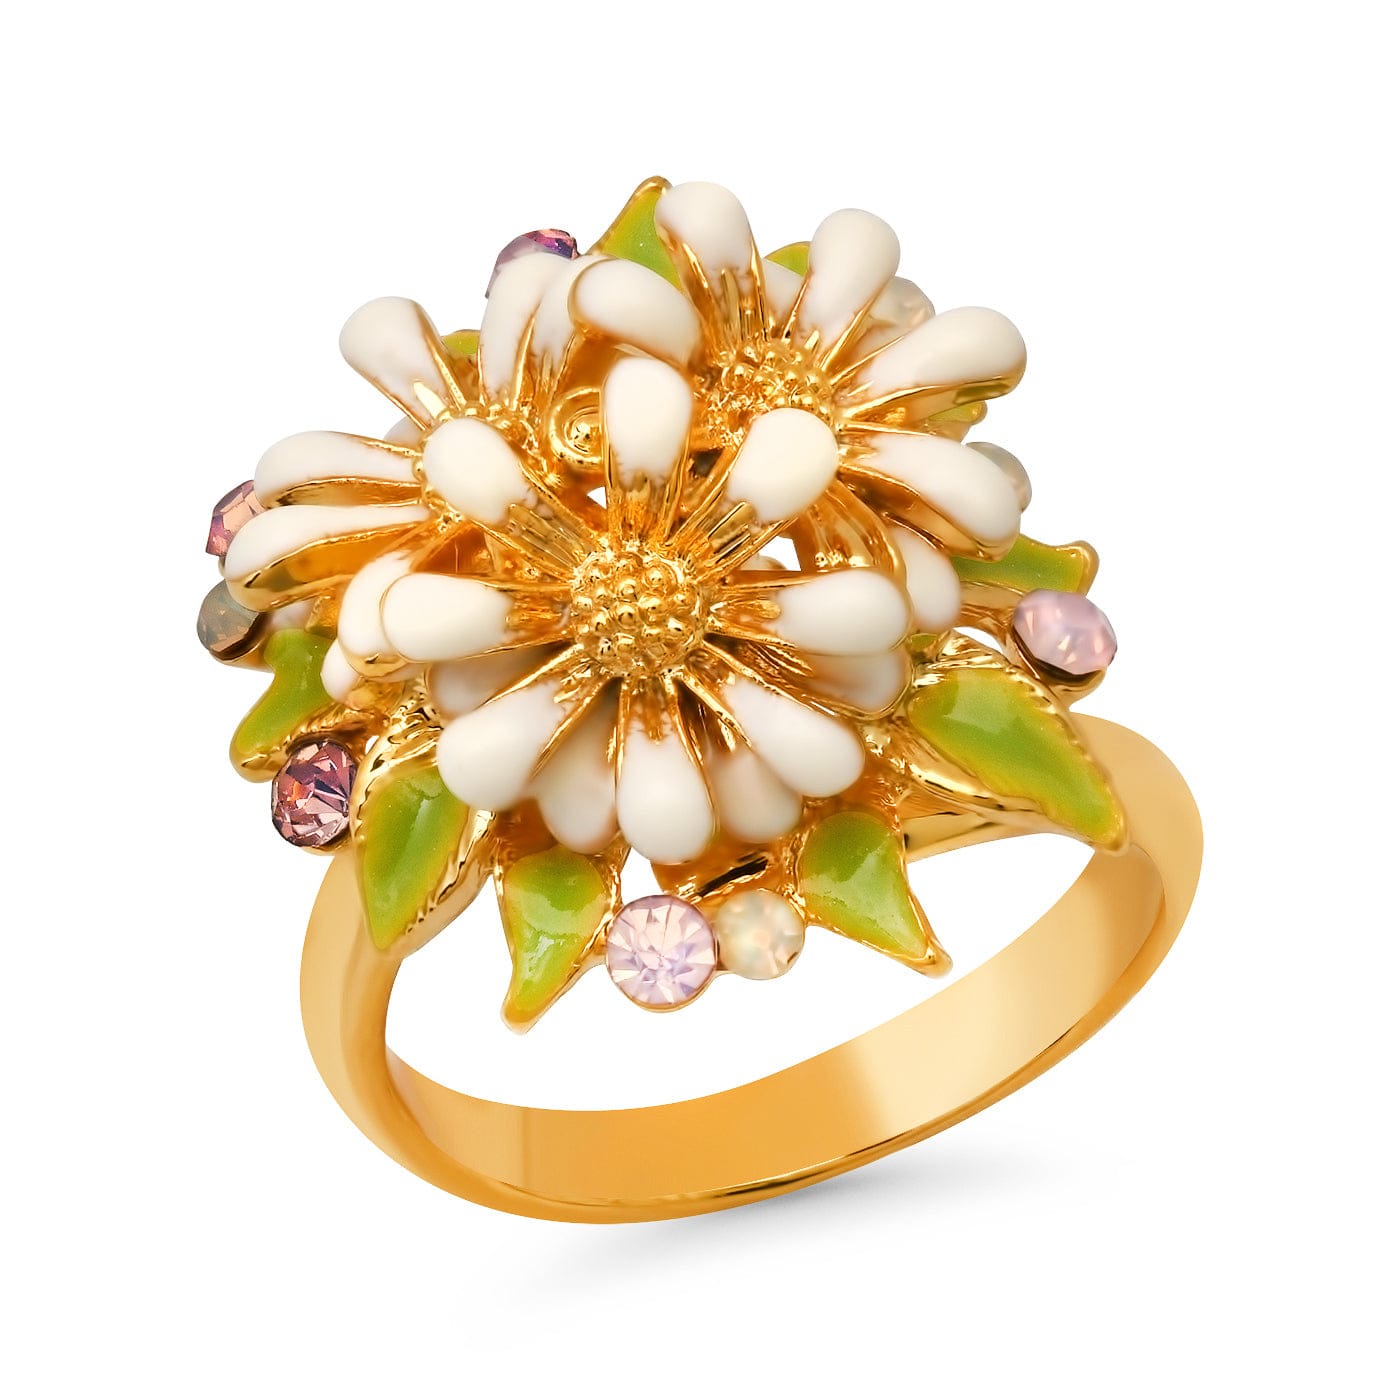 TAI JEWELRY Rings Flower Burst Ring